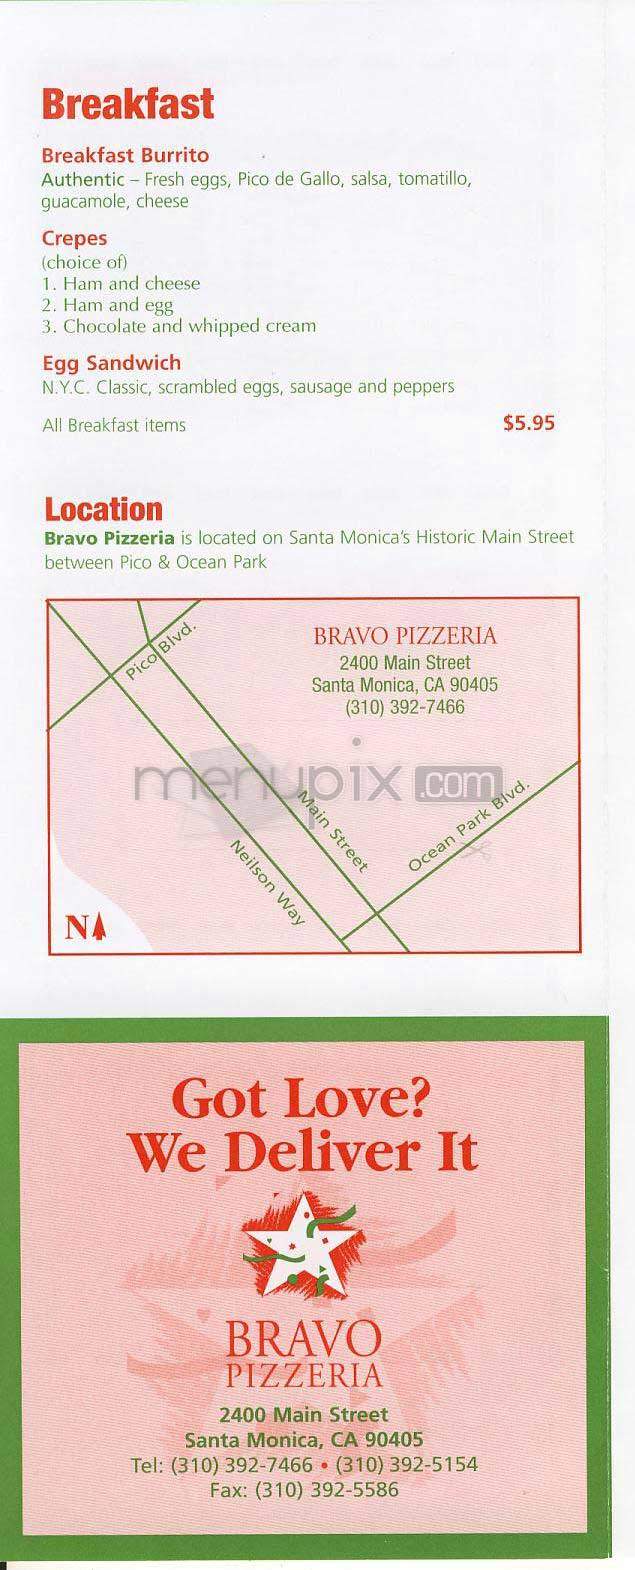 /201006/Bravo-Pizzeria-Santa-Monica-CA - Santa Monica, CA